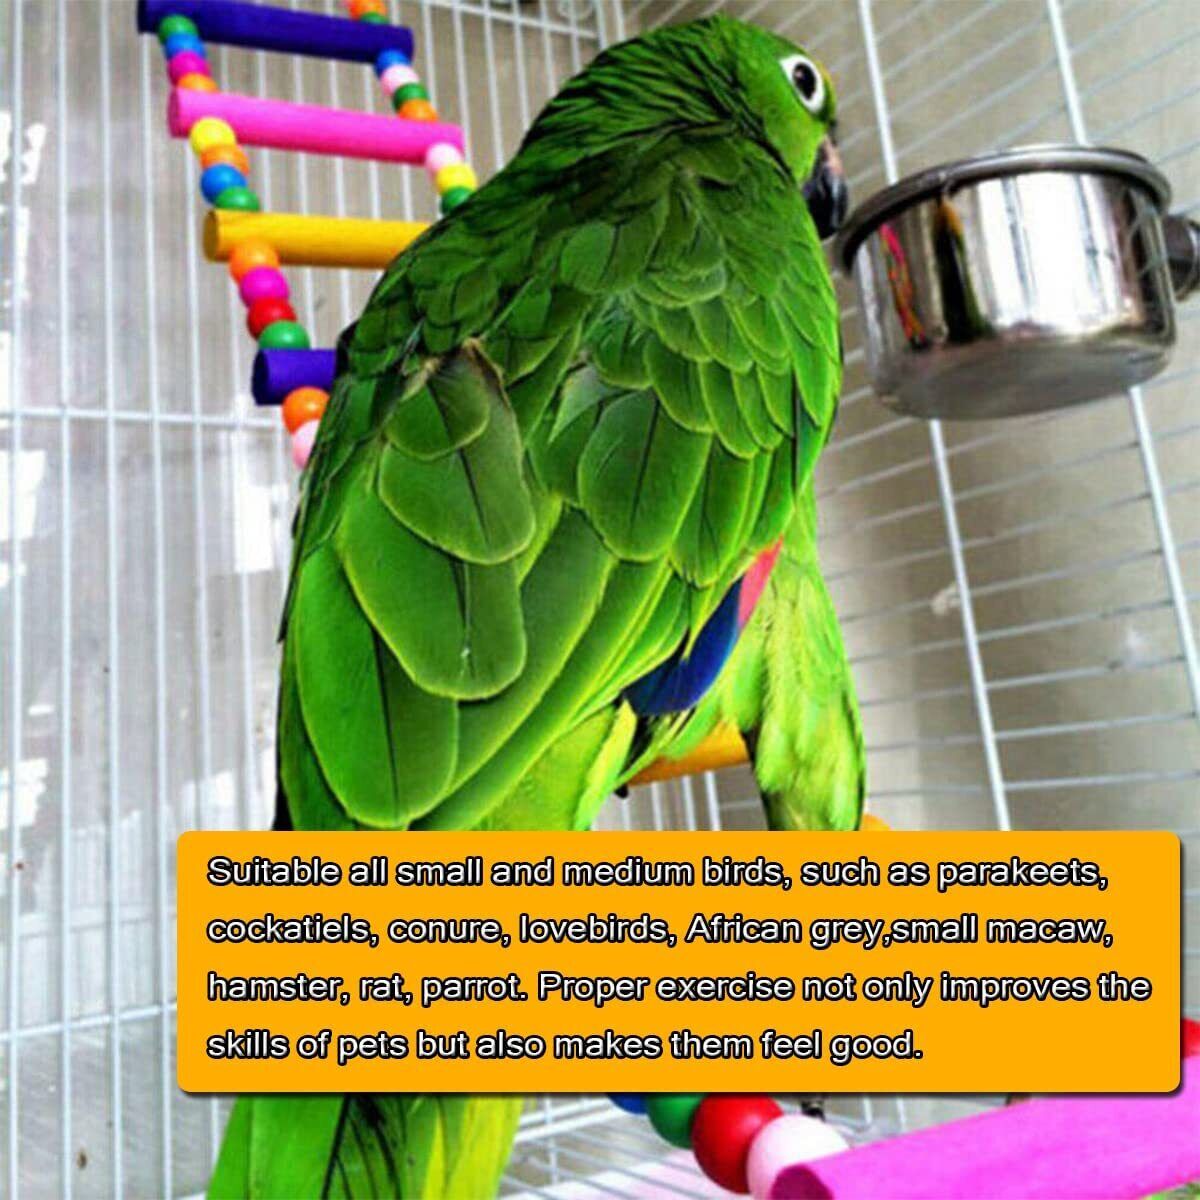 Natural Wood Pet Bird Parrot Ladders Climbing Toy Hanging Colorful Balls Decor